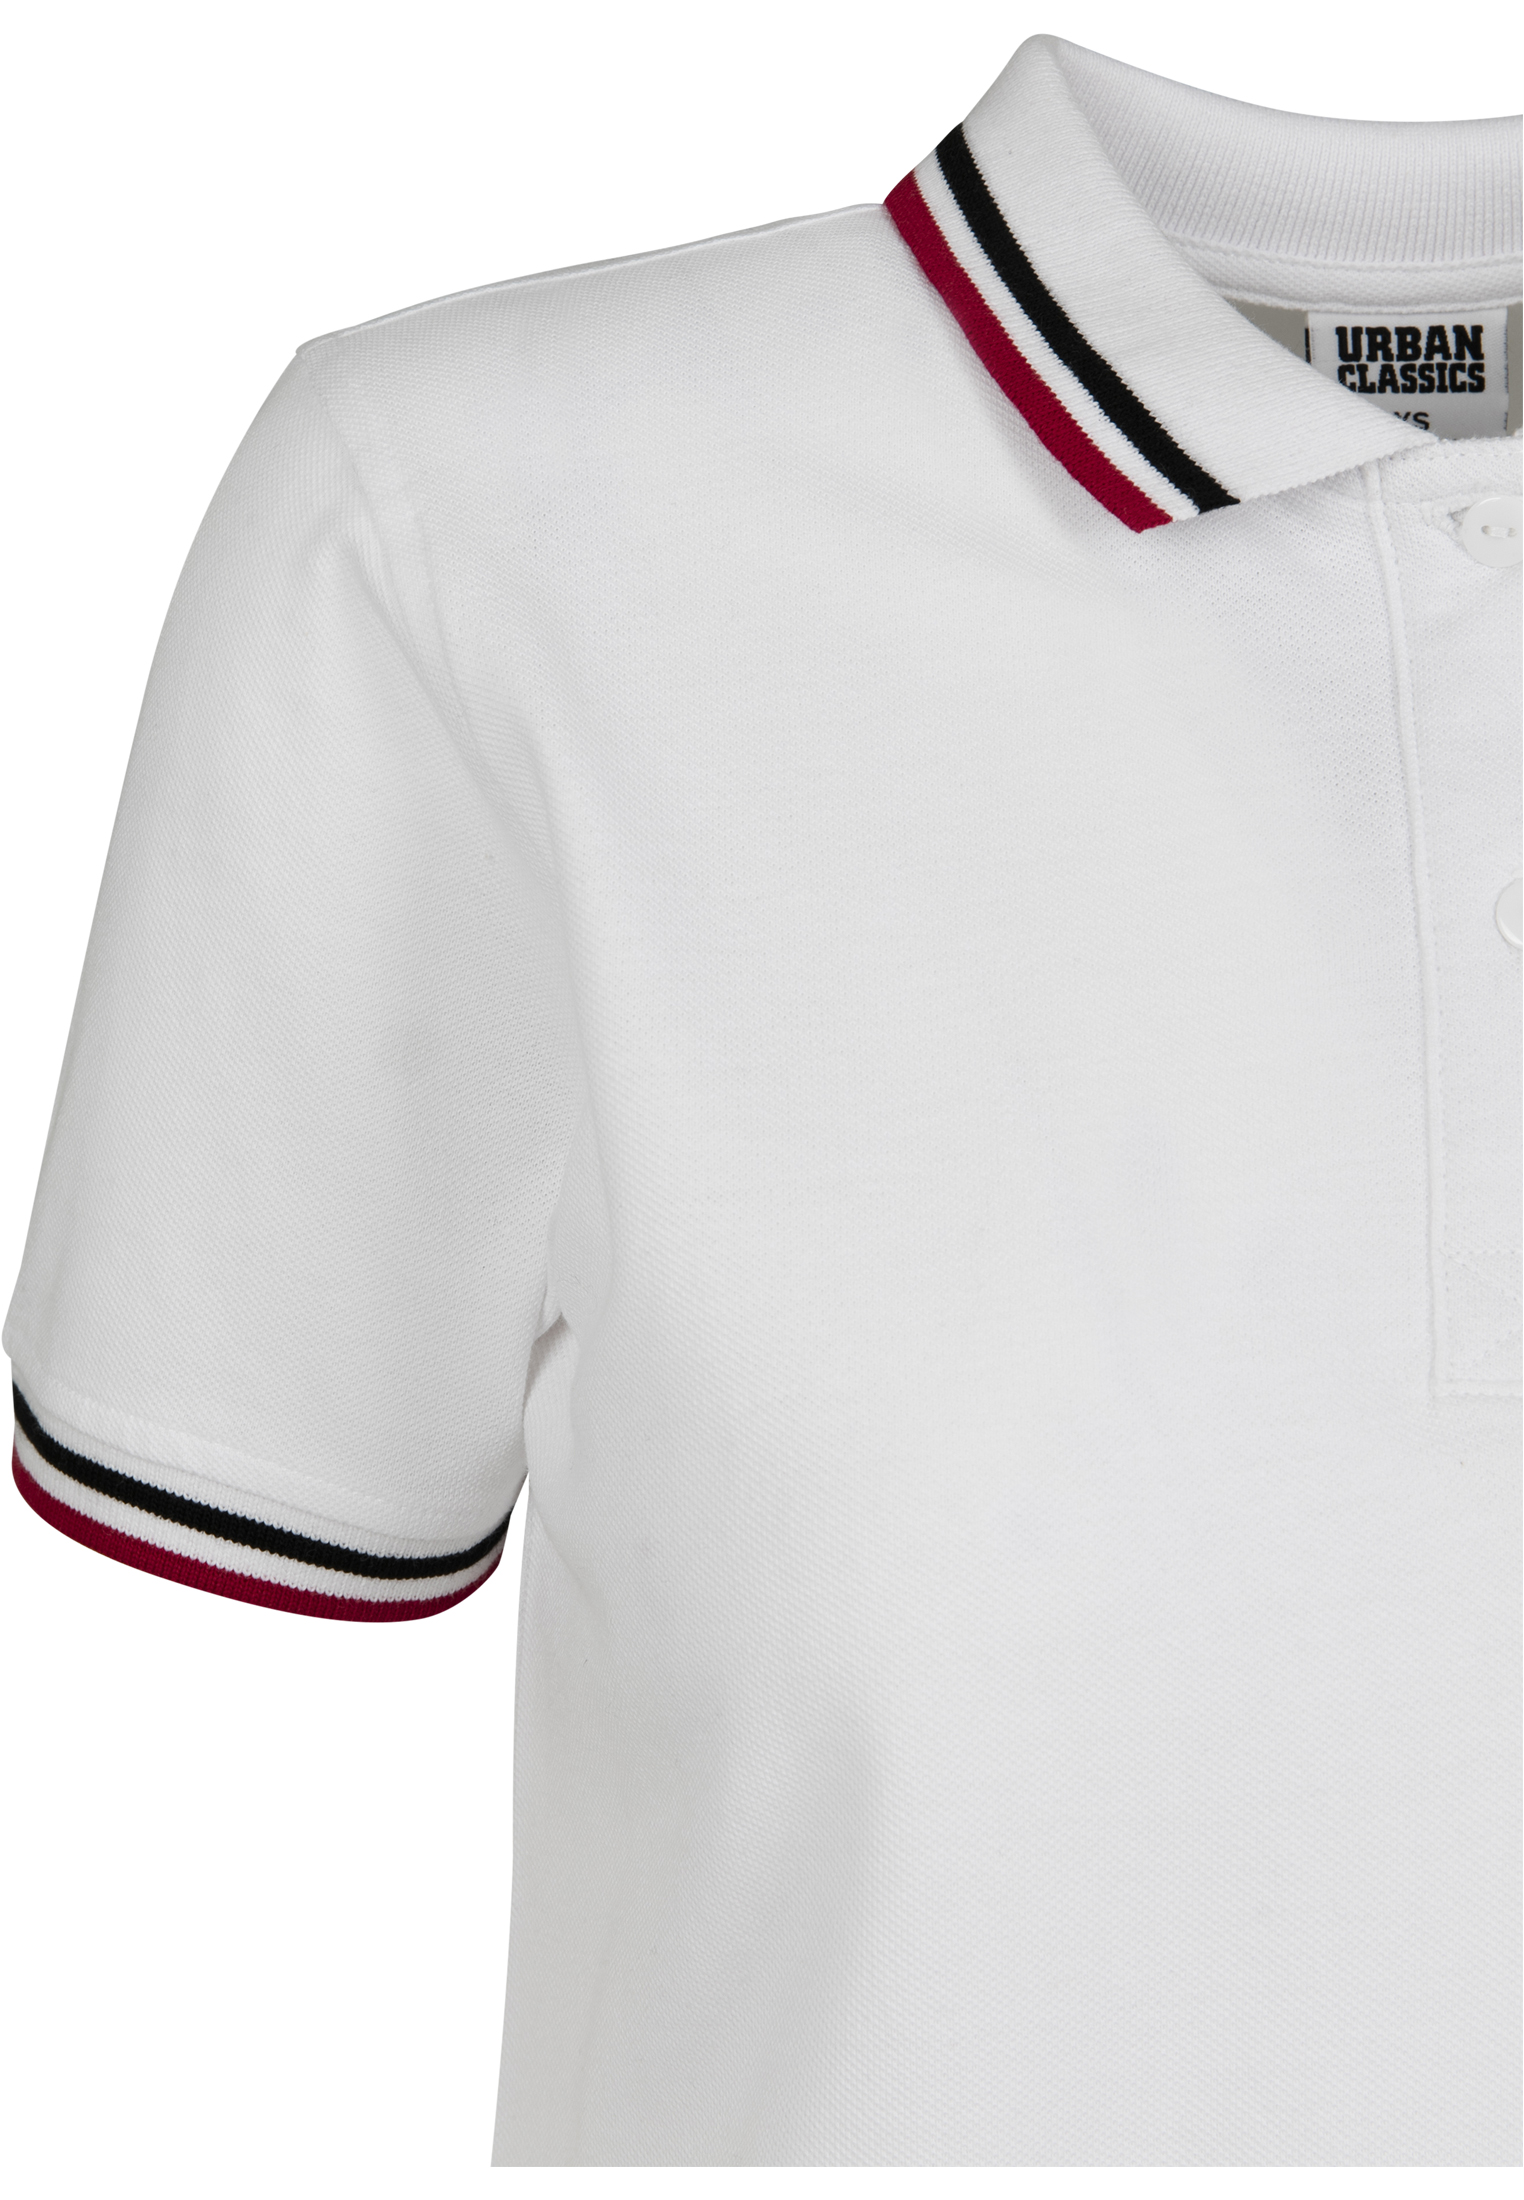 Kleider & R?cke Ladies Polo Dress in Farbe white